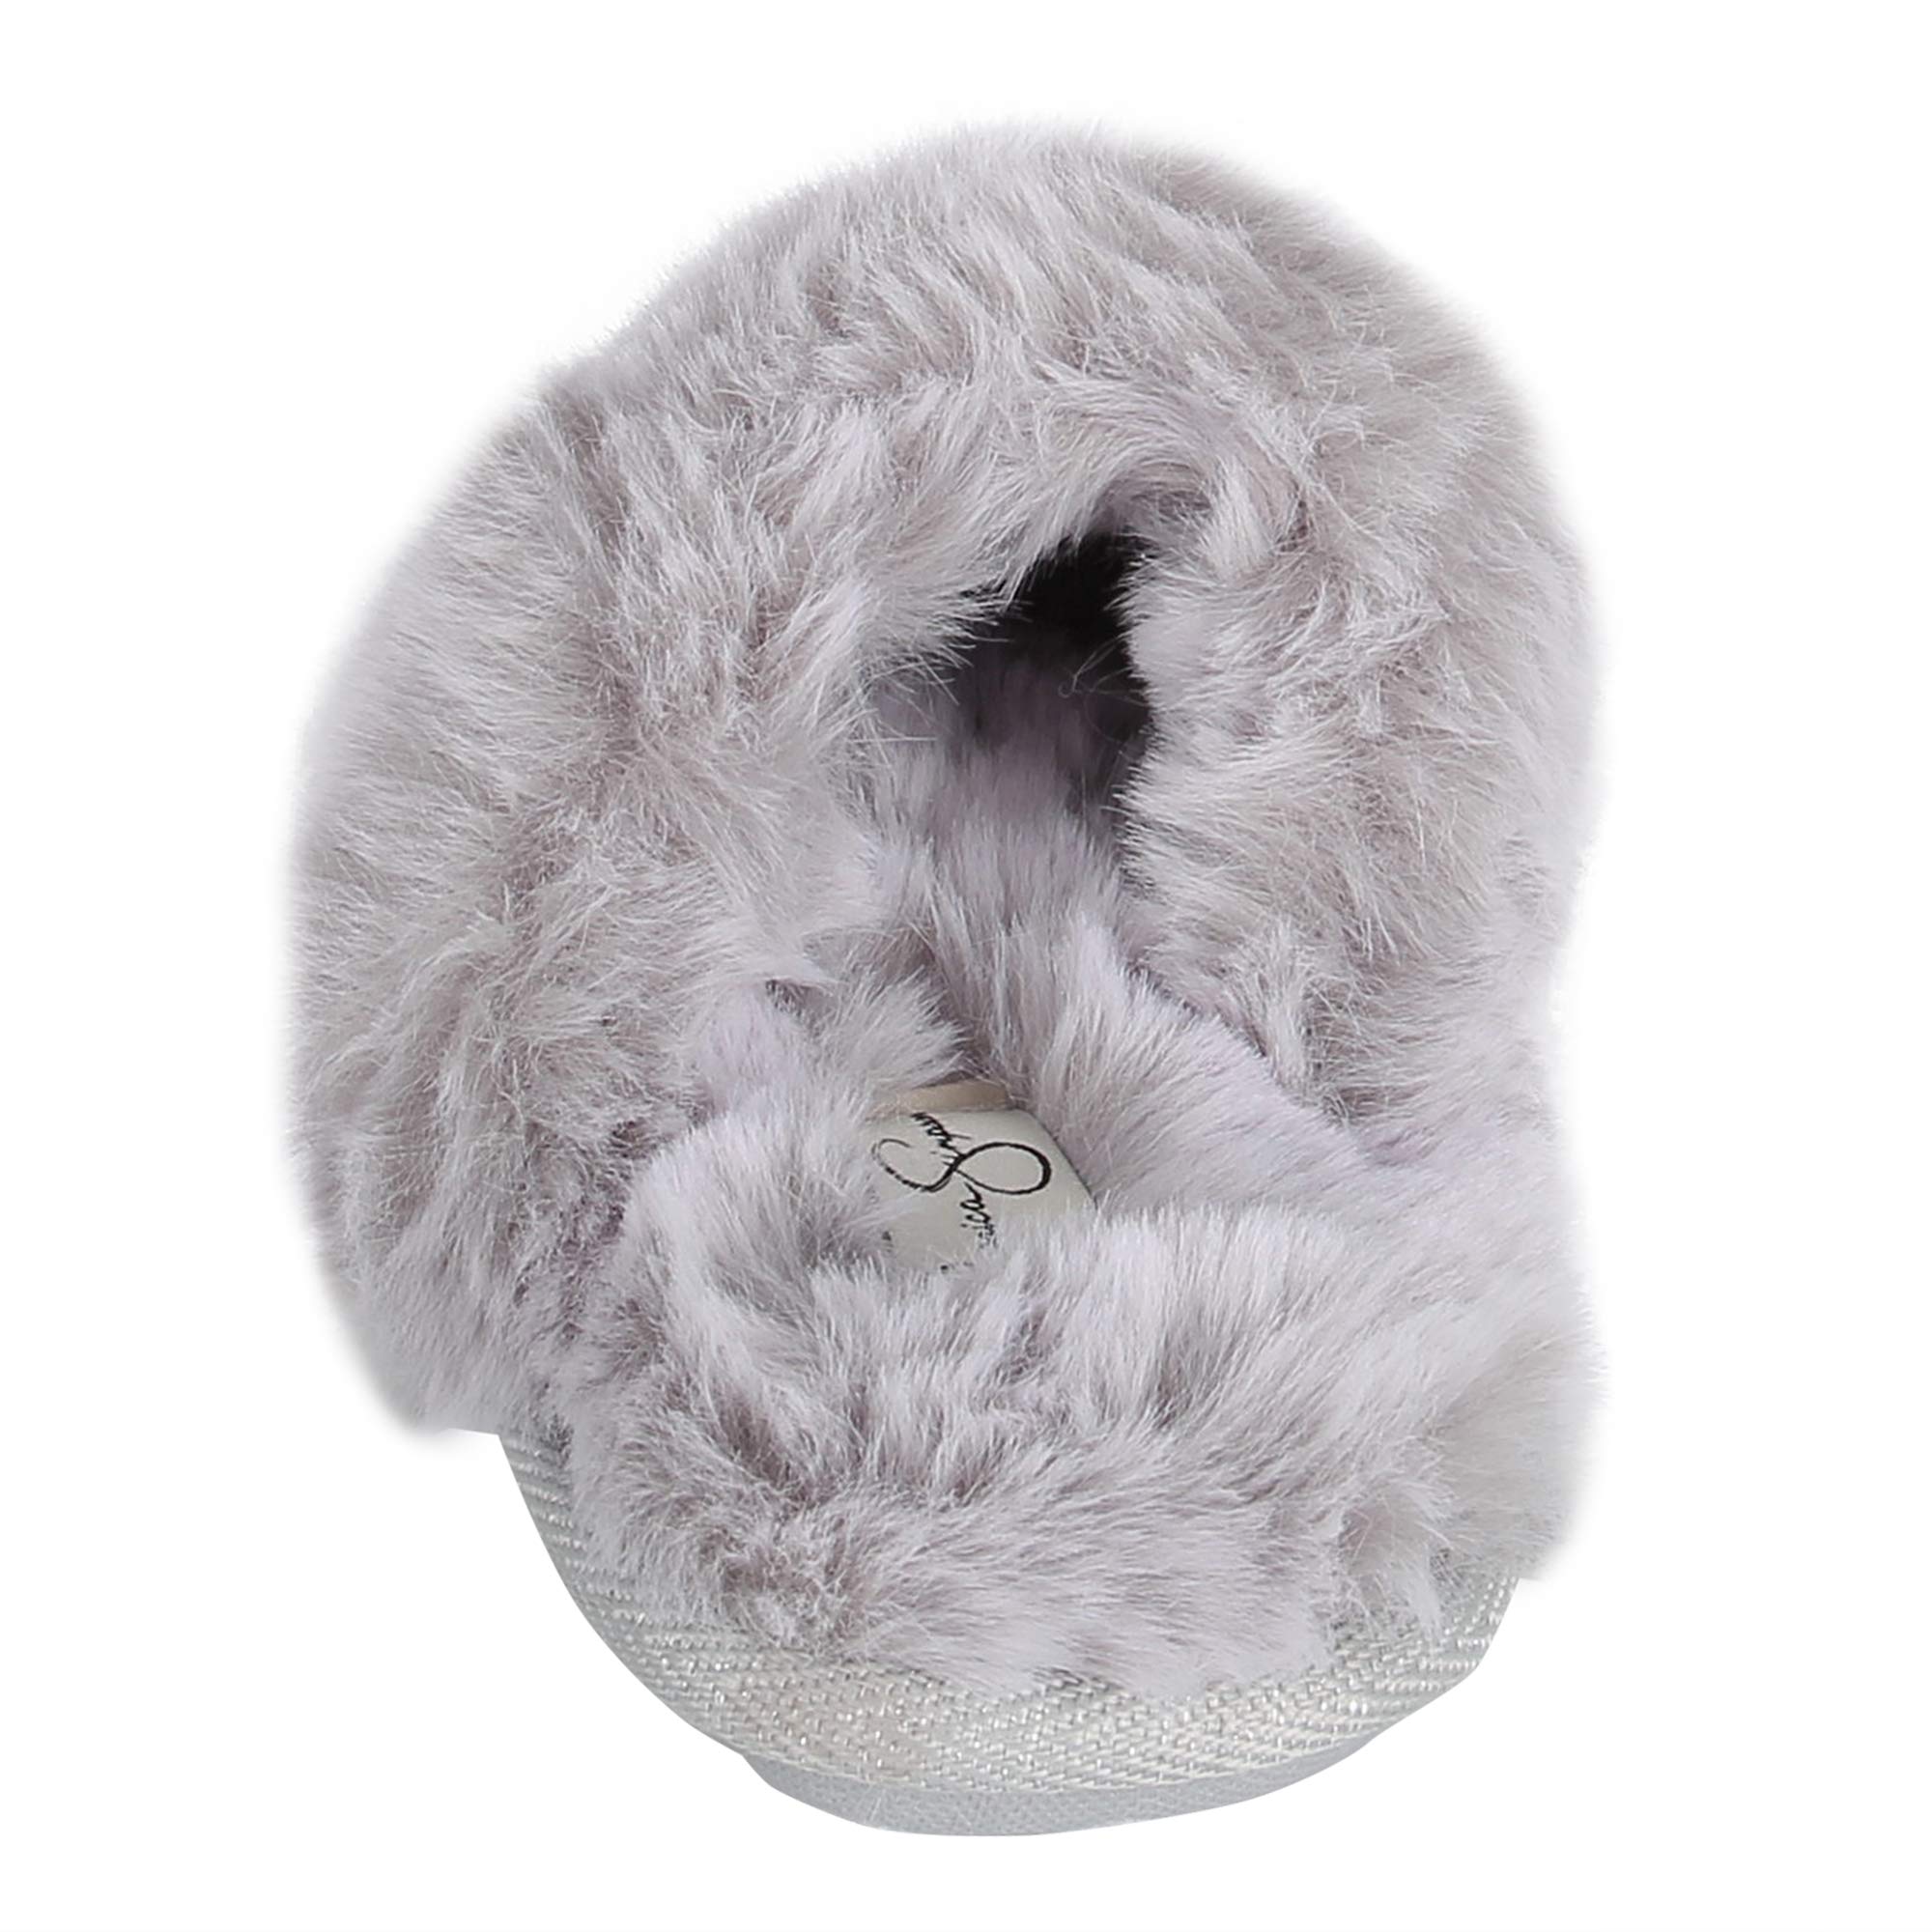 Jessica Simpson Girls Comfy Slippers - Cute Faux Fur Slip-on Shoes Memory Foam House Slipper